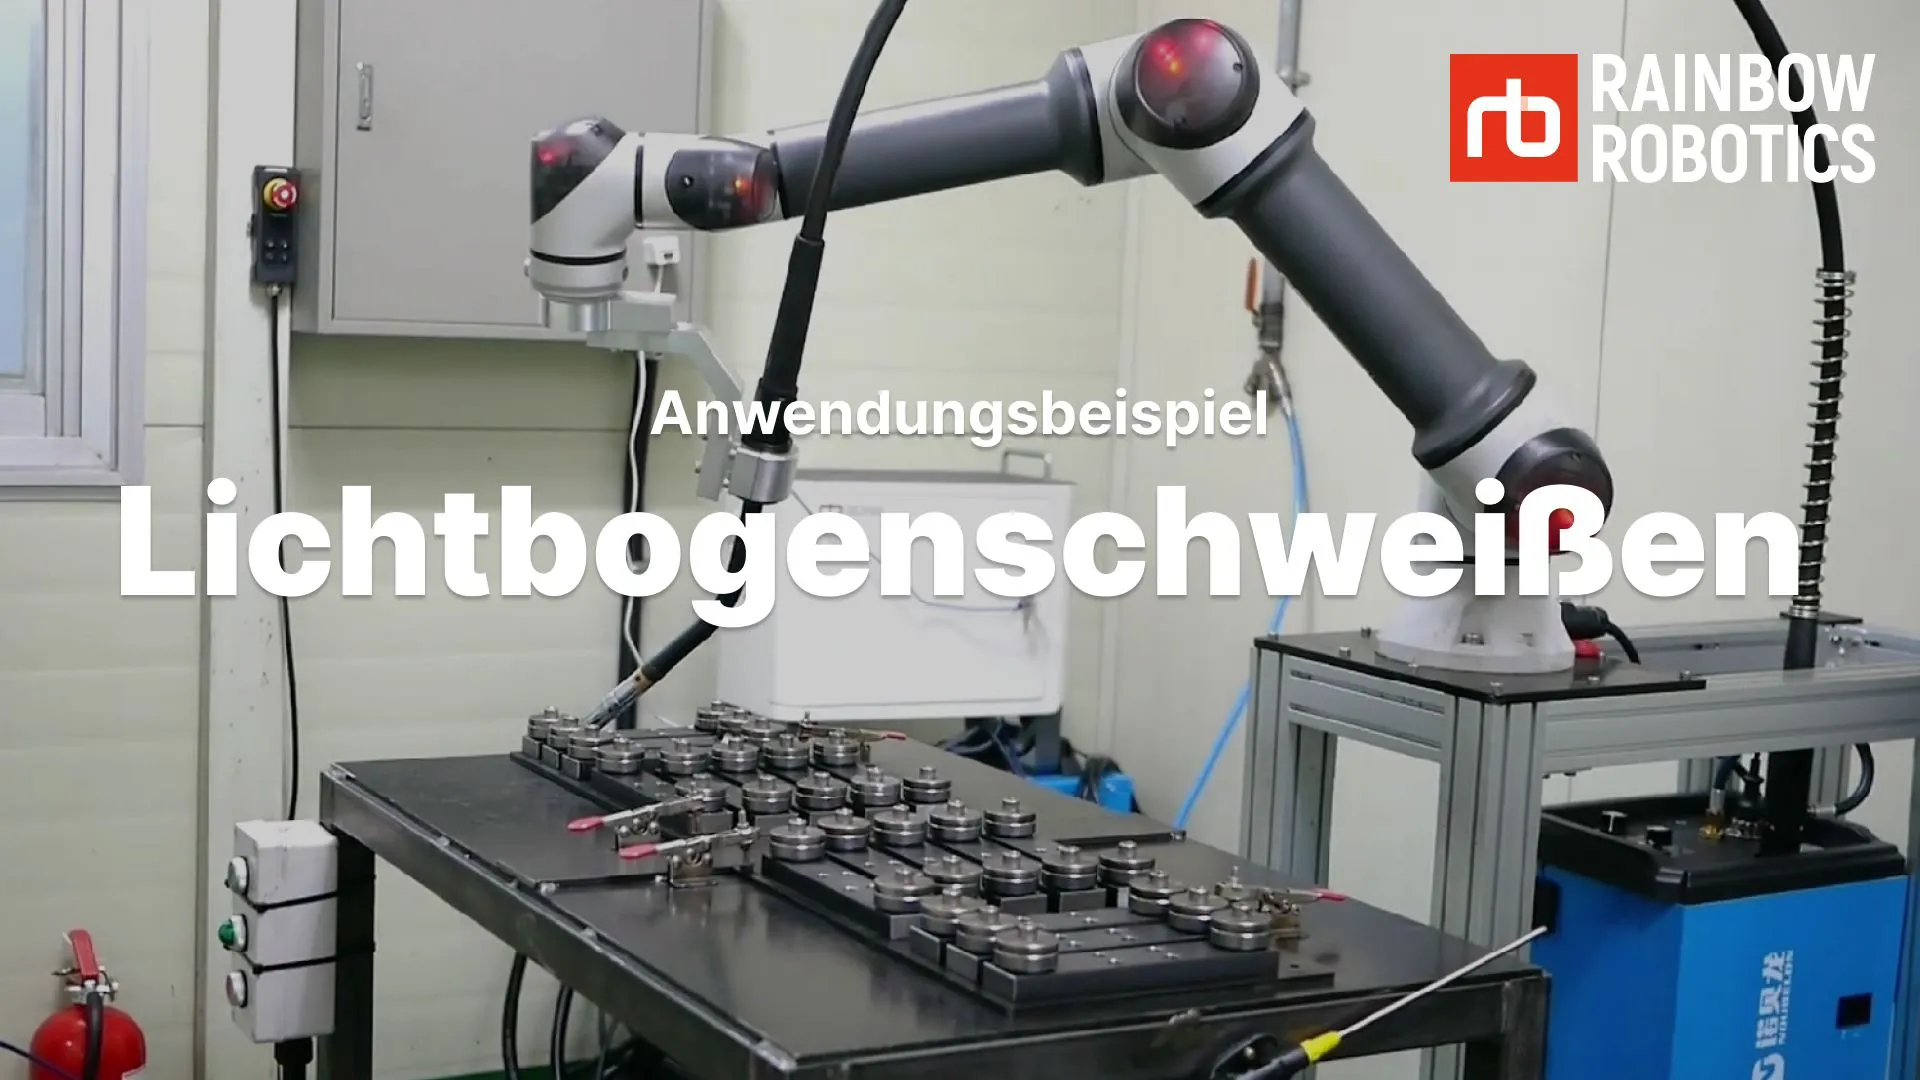 Thumbnail of Lichtbogenschweißen example application of Rainbow Robotics Cobots